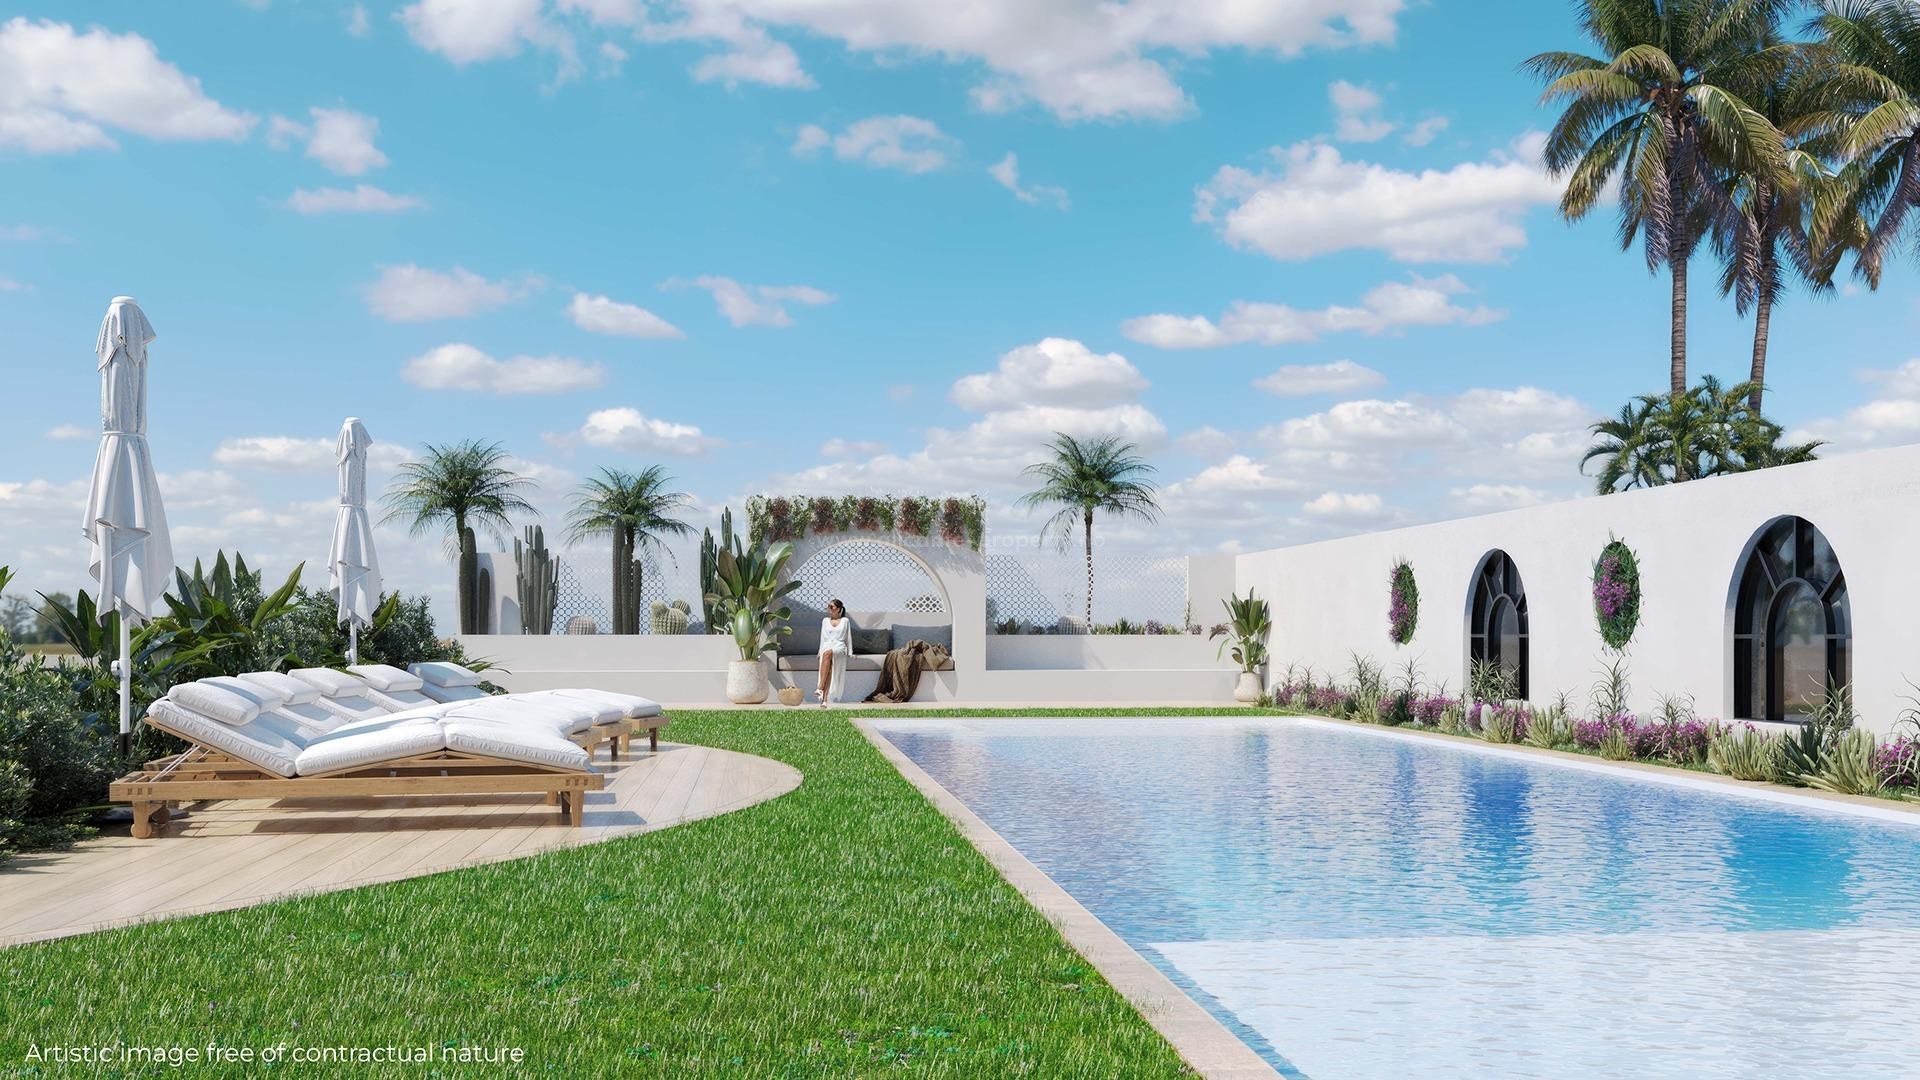 Nye bungalow-leiligheter i Rojales, hage-takterrasse, 2 soverom, 2 bad, felles grøntområder med svømmebasseng og privat parkering